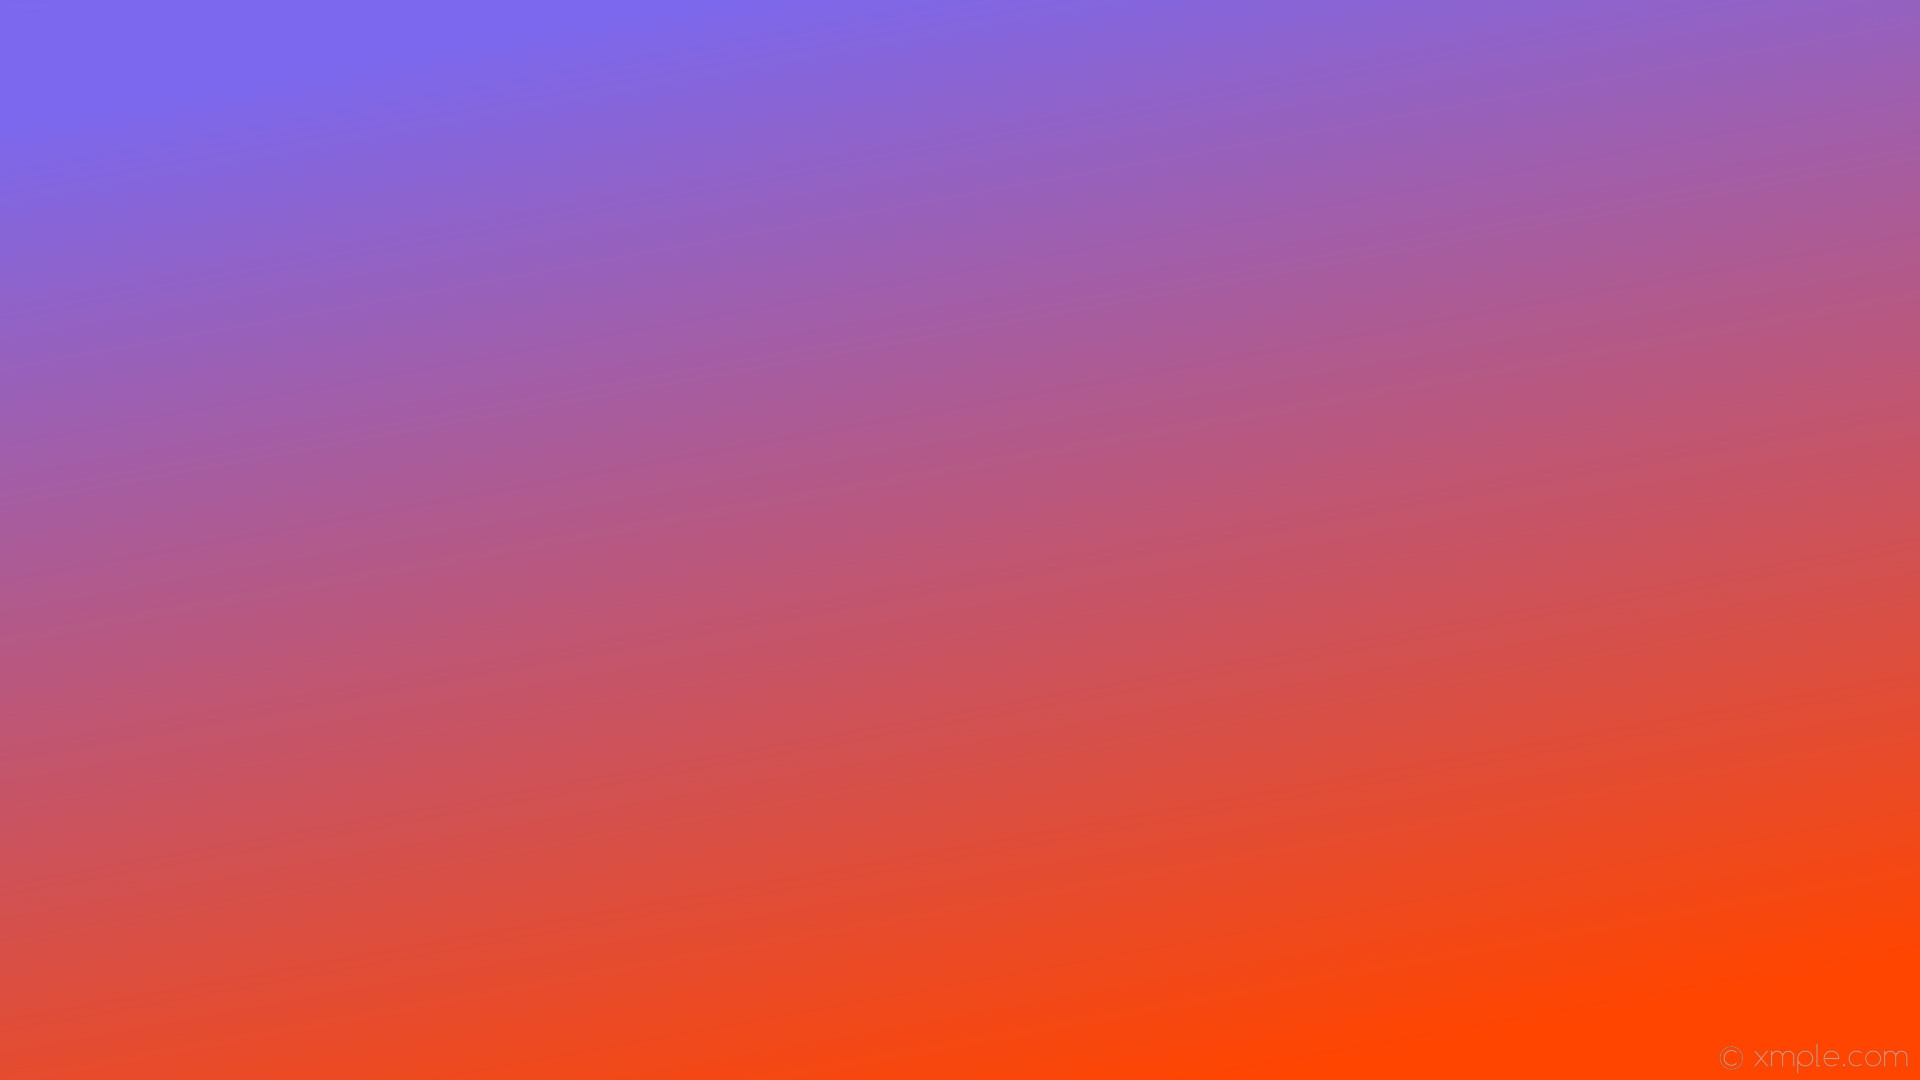 1920x1080 wallpaper orange purple gradient linear medium slate blue orangered #7b68ee  #ff4500 120Â°